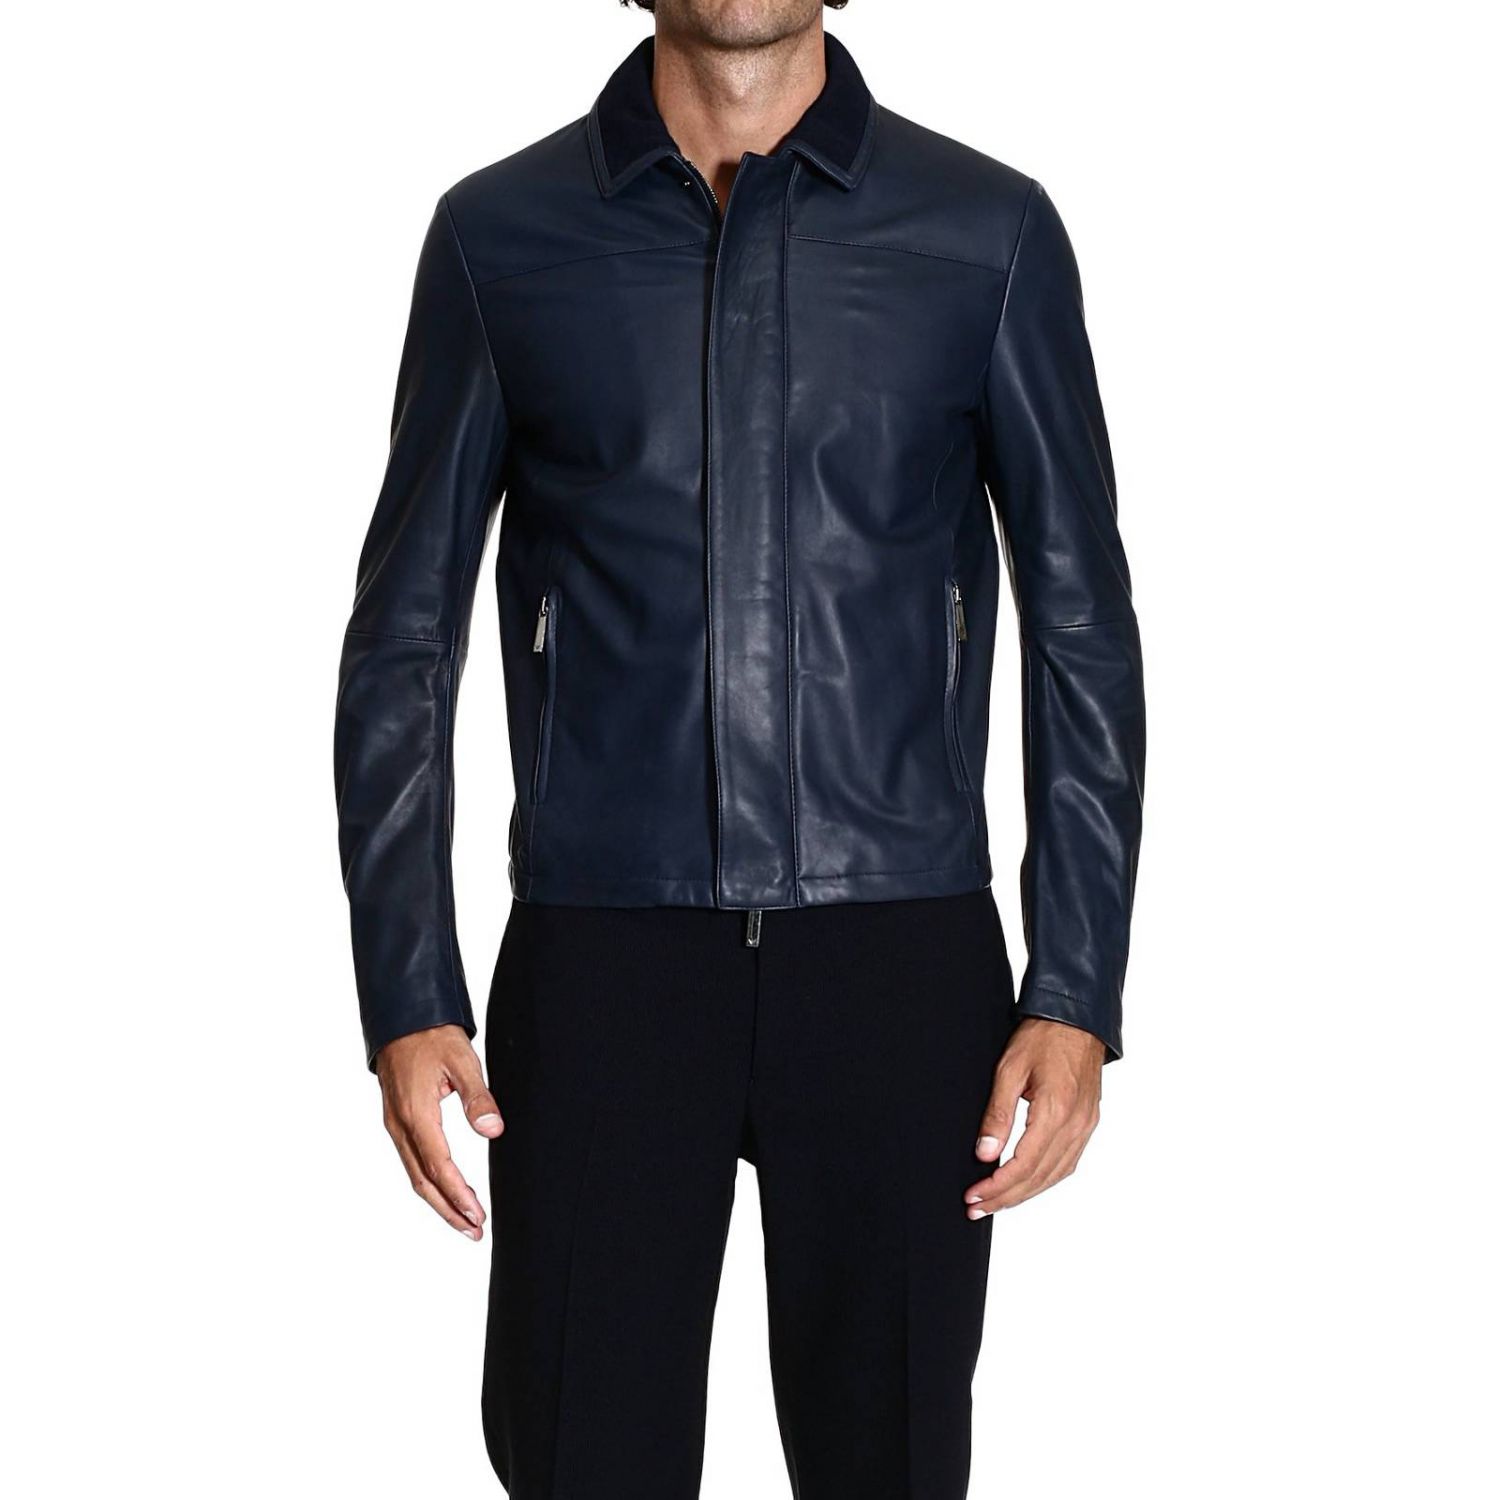 emporio leather jacket price